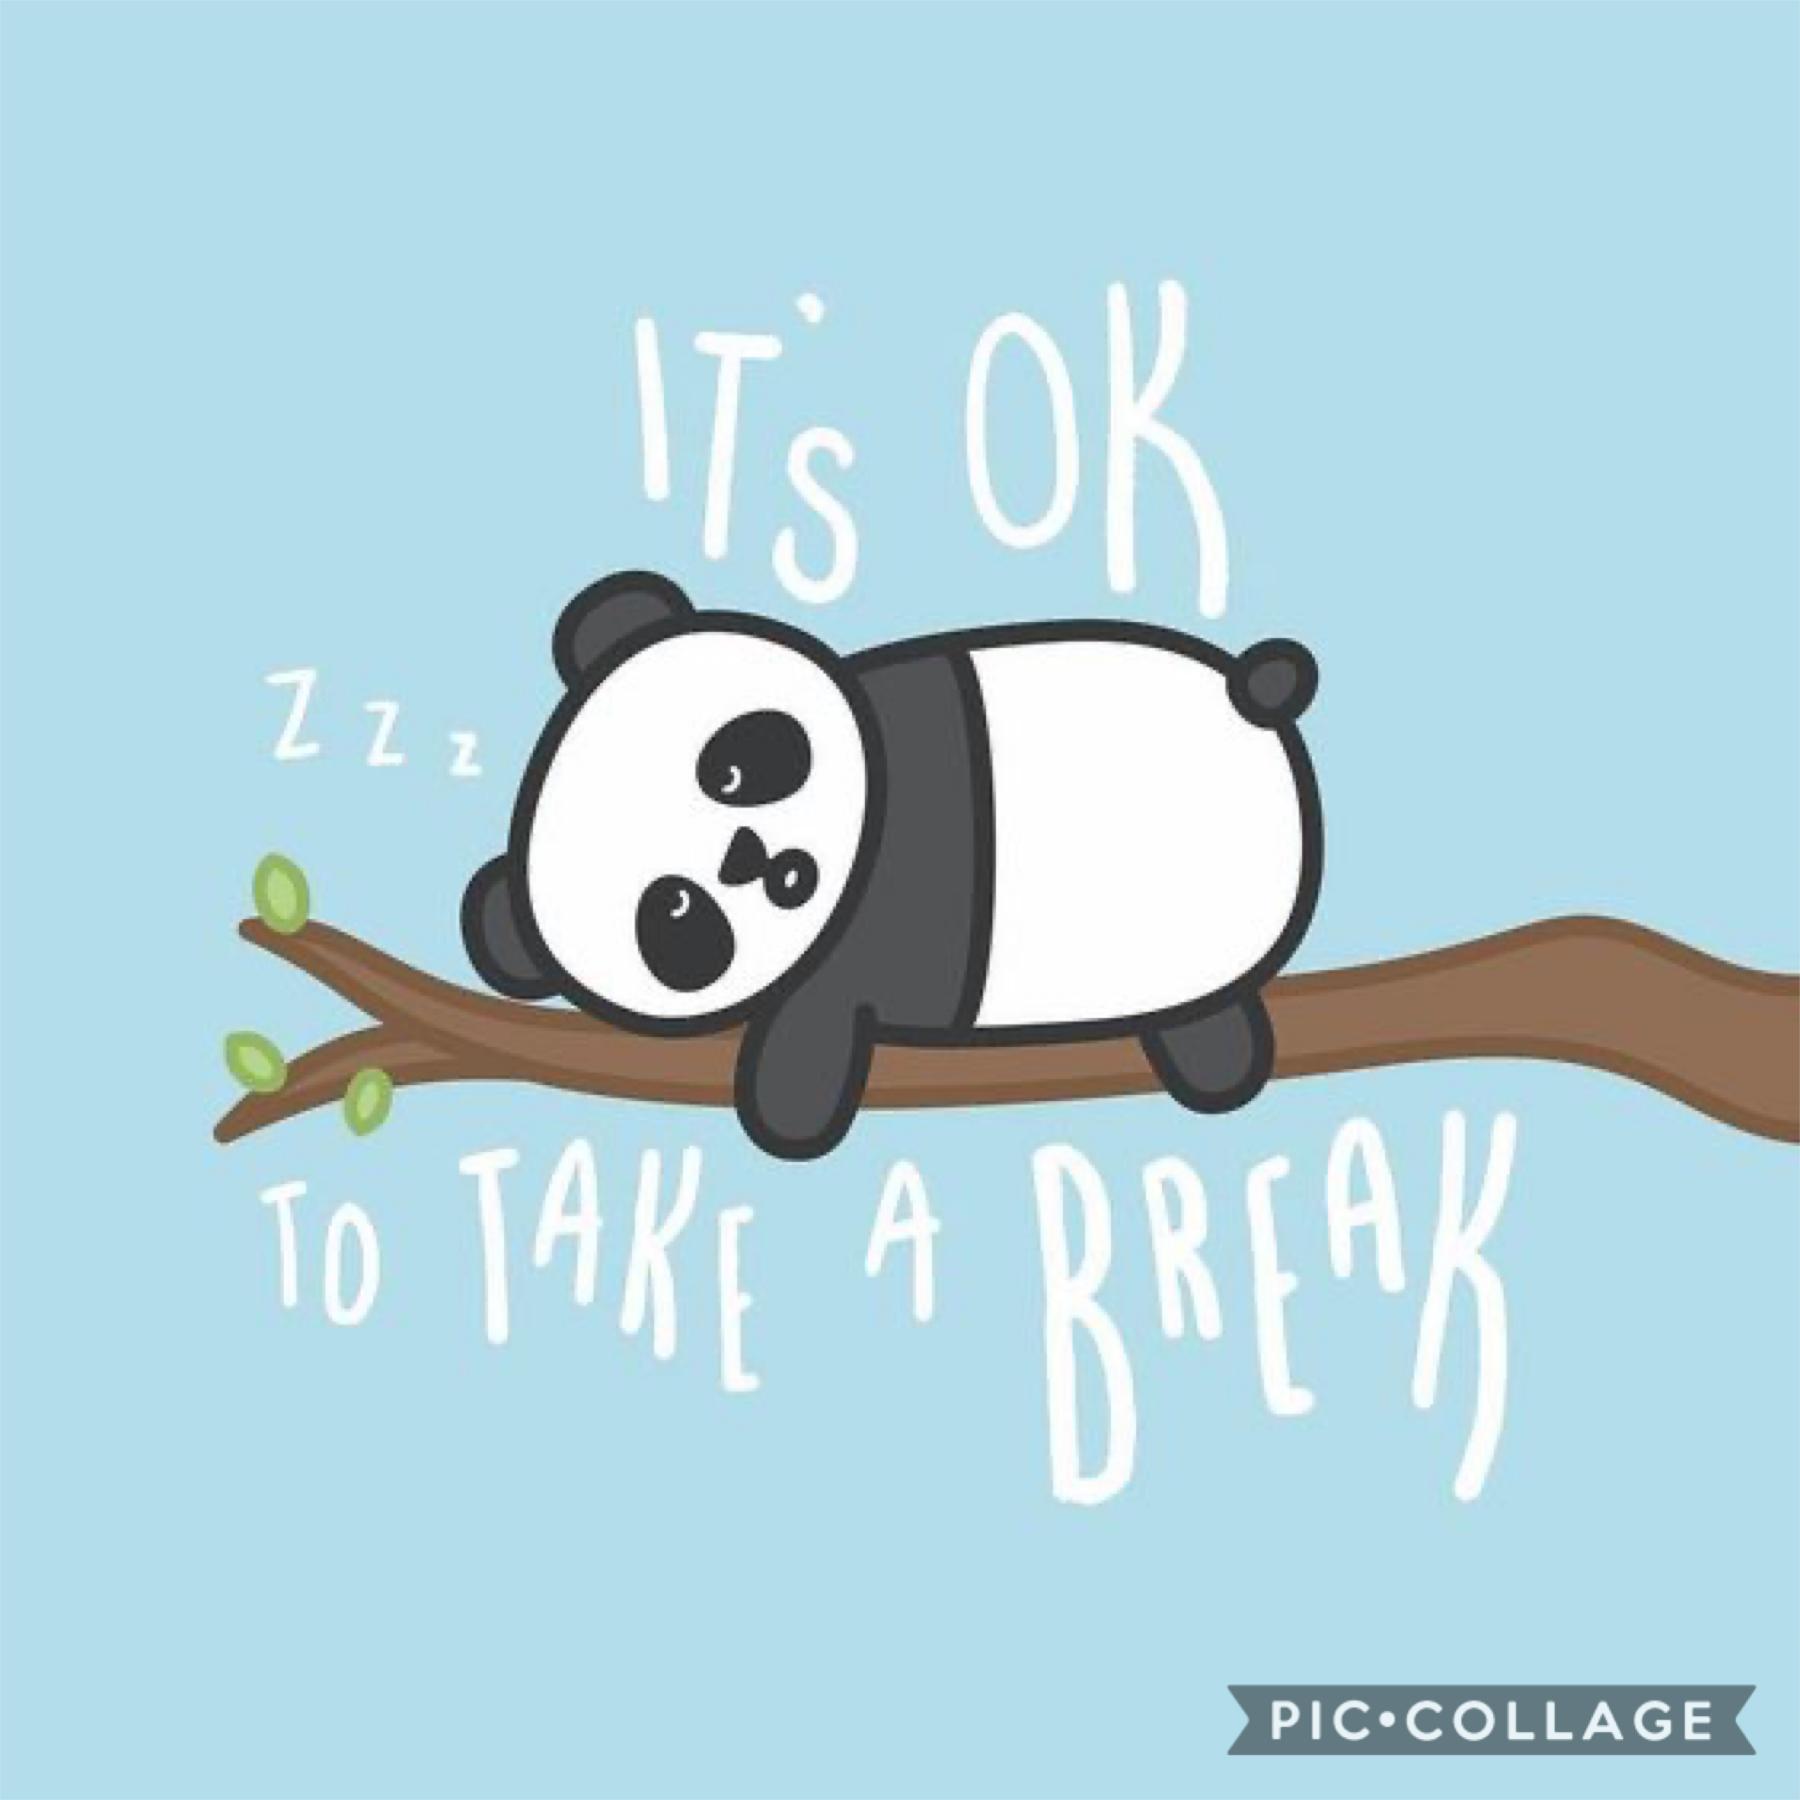 Just take a break